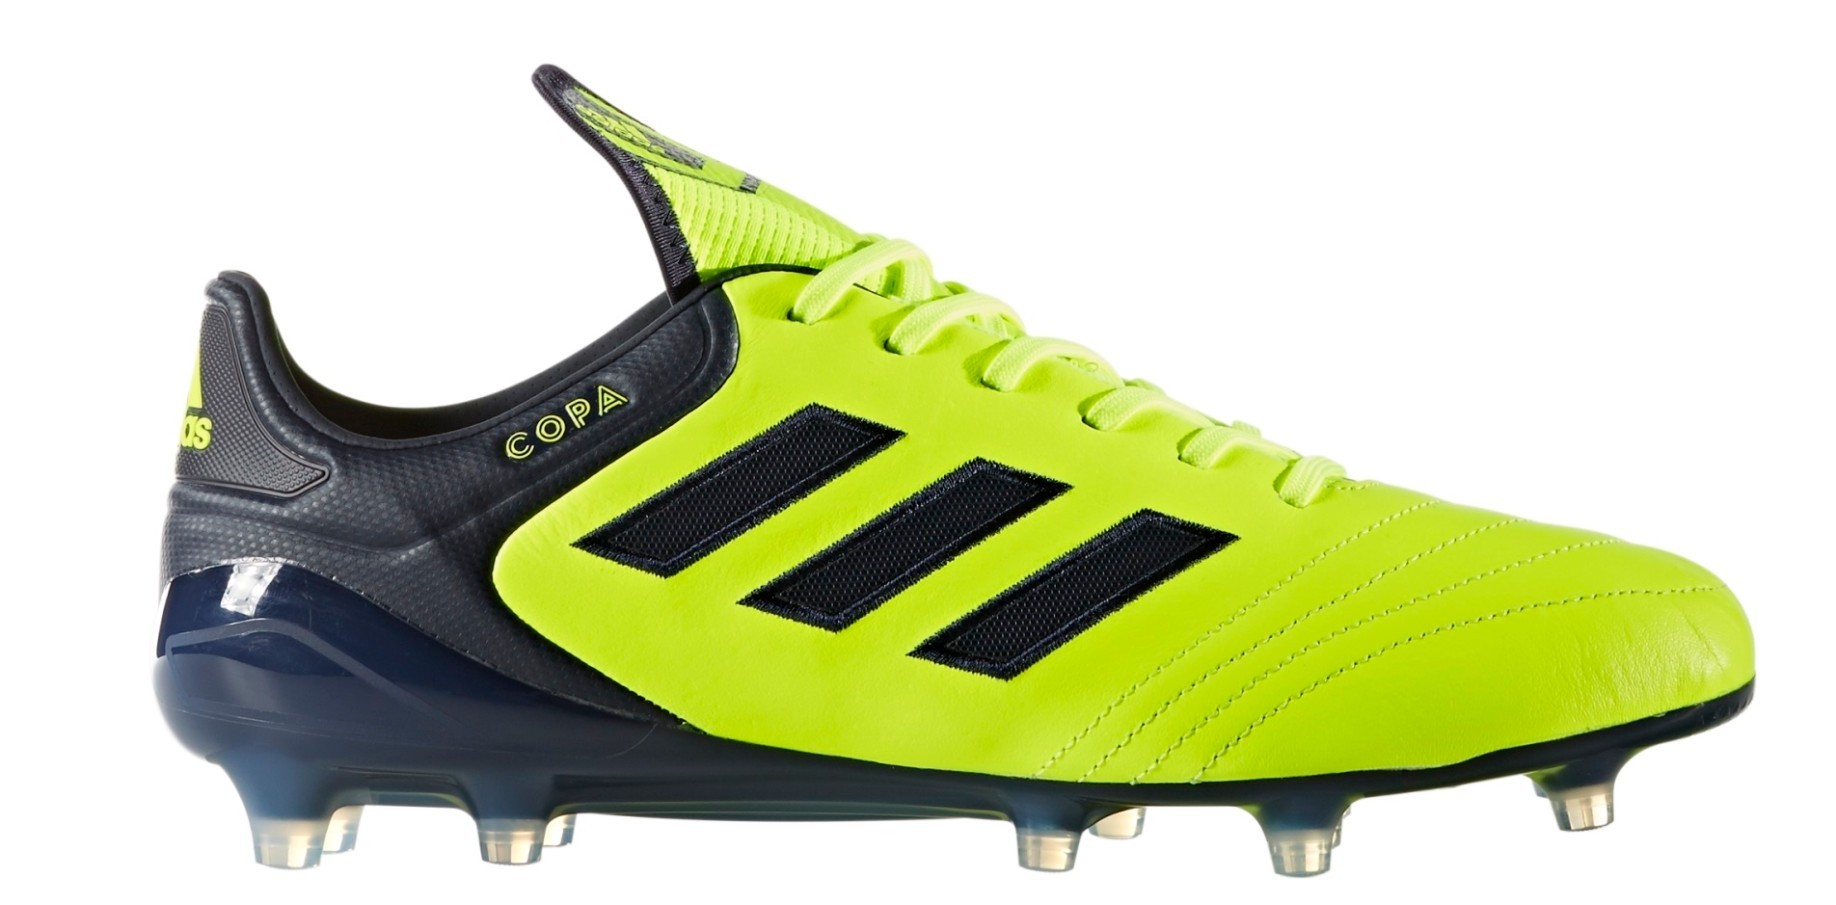 Football boots Adidas Copa 17.1 FG Ocean Storm Pack فستان قطن